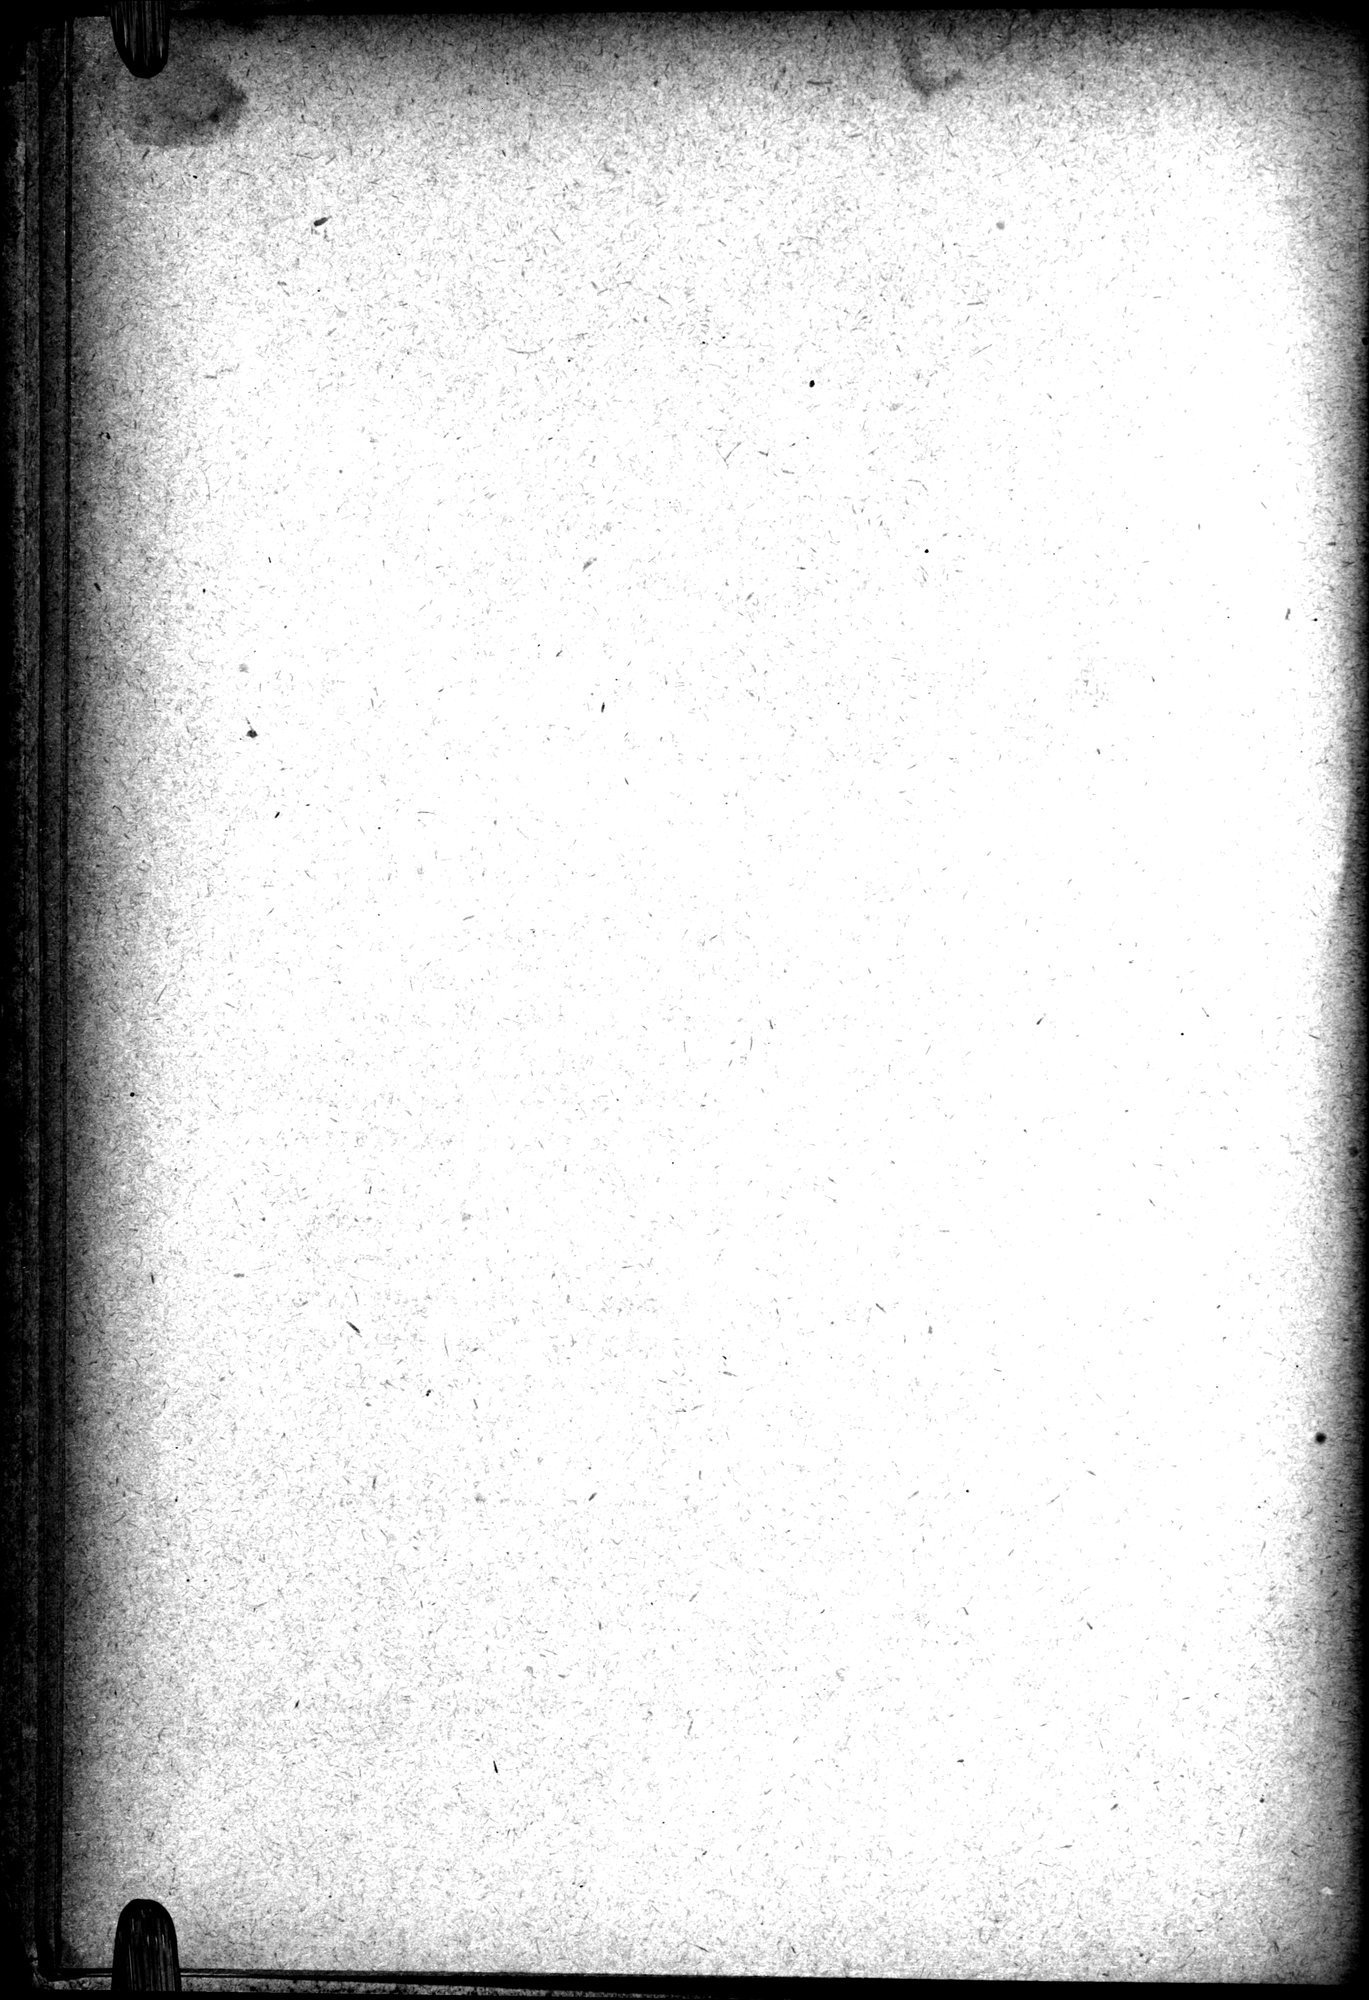 Mongoliya i Amdo i mertby gorod Khara-Khoto : vol.1 / Page 26 (Grayscale High Resolution Image)